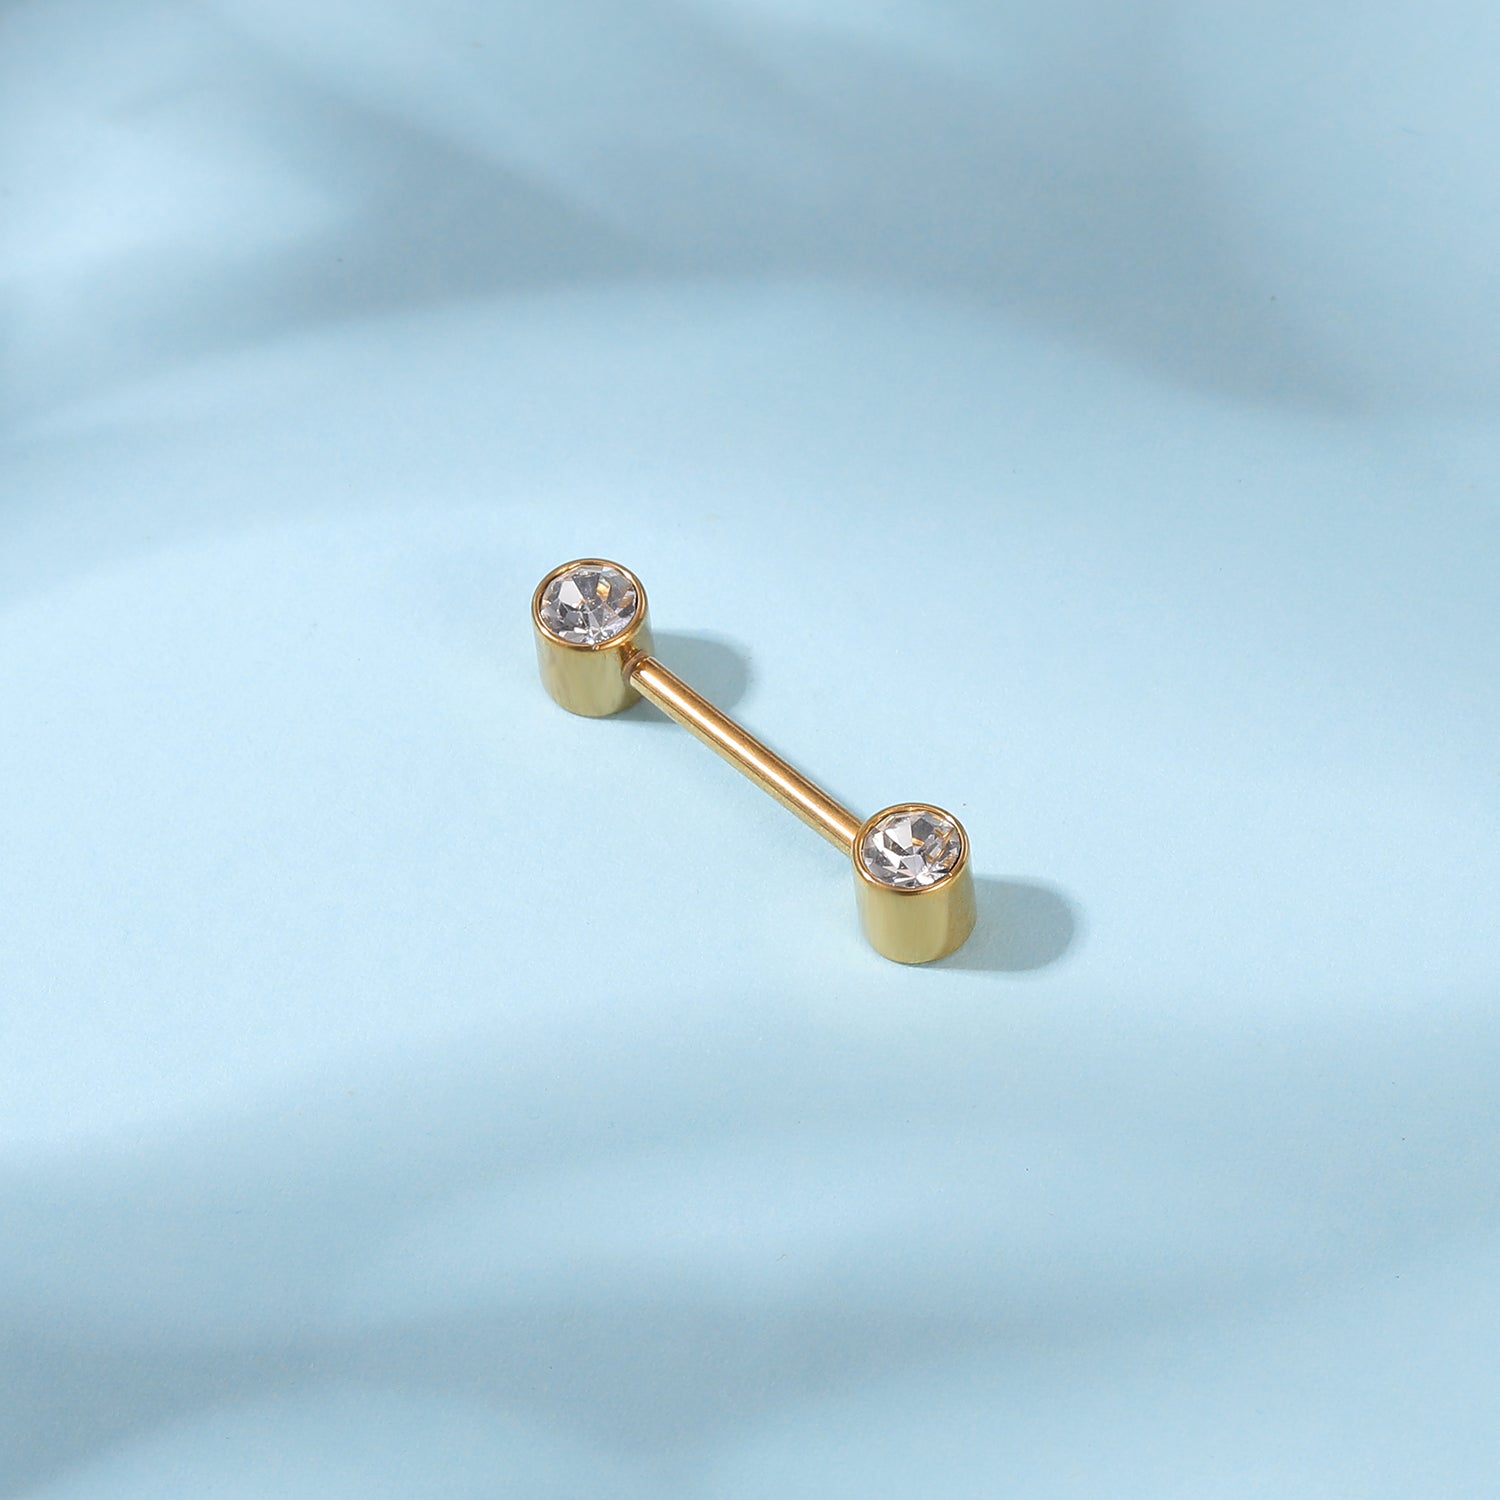 2pcs 14G Simple Nipple Barbell Ring Round Crystal Gold Nipple Piercing